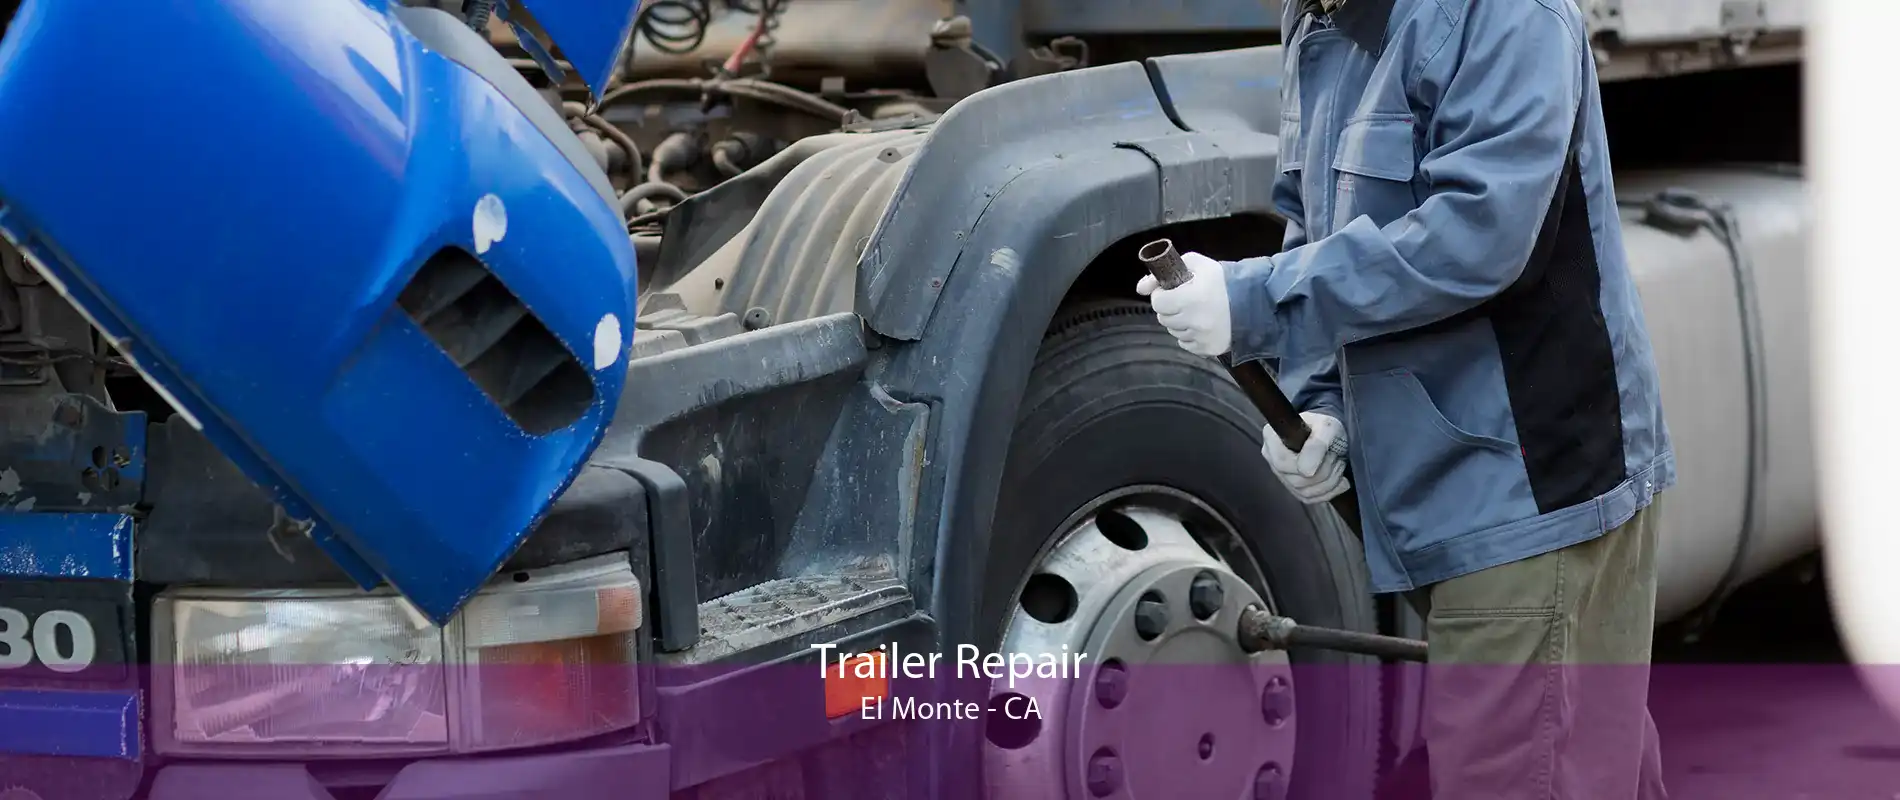 Trailer Repair El Monte - CA